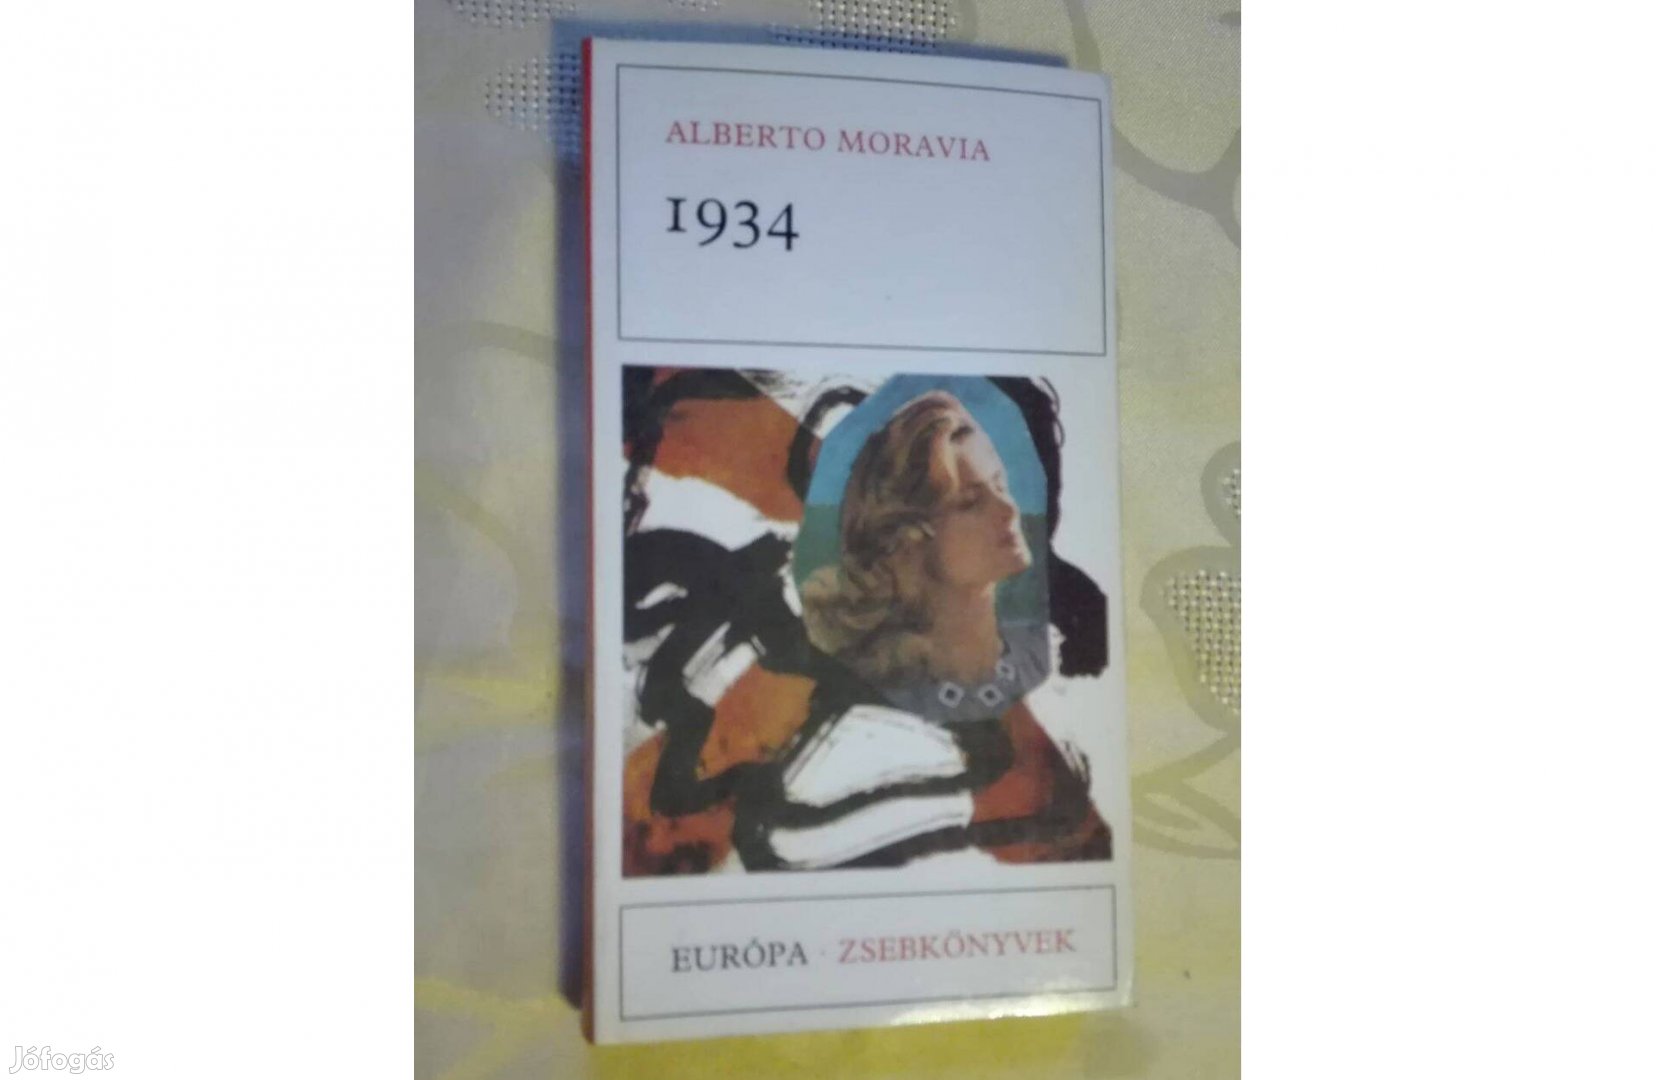 Alberto Moravia:1934, Európa Zsebkönyvek sorozat, olvasatlan